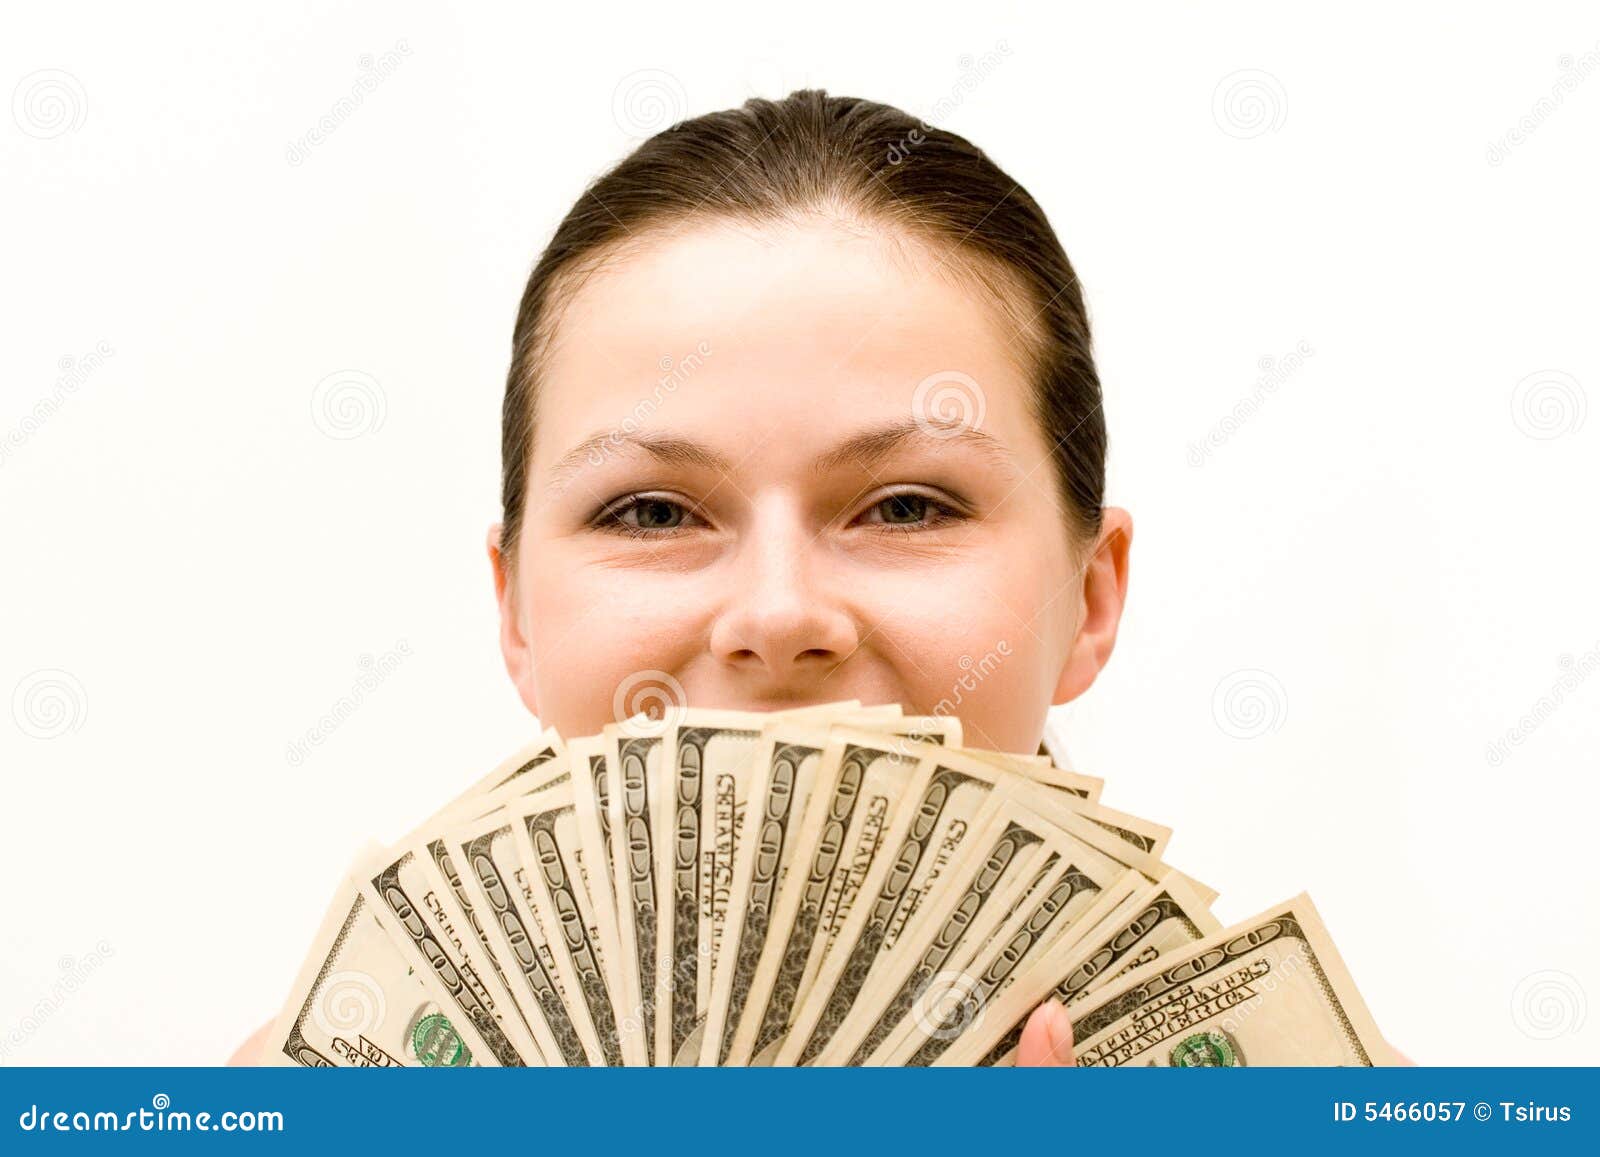 Girl and money, fan dollar